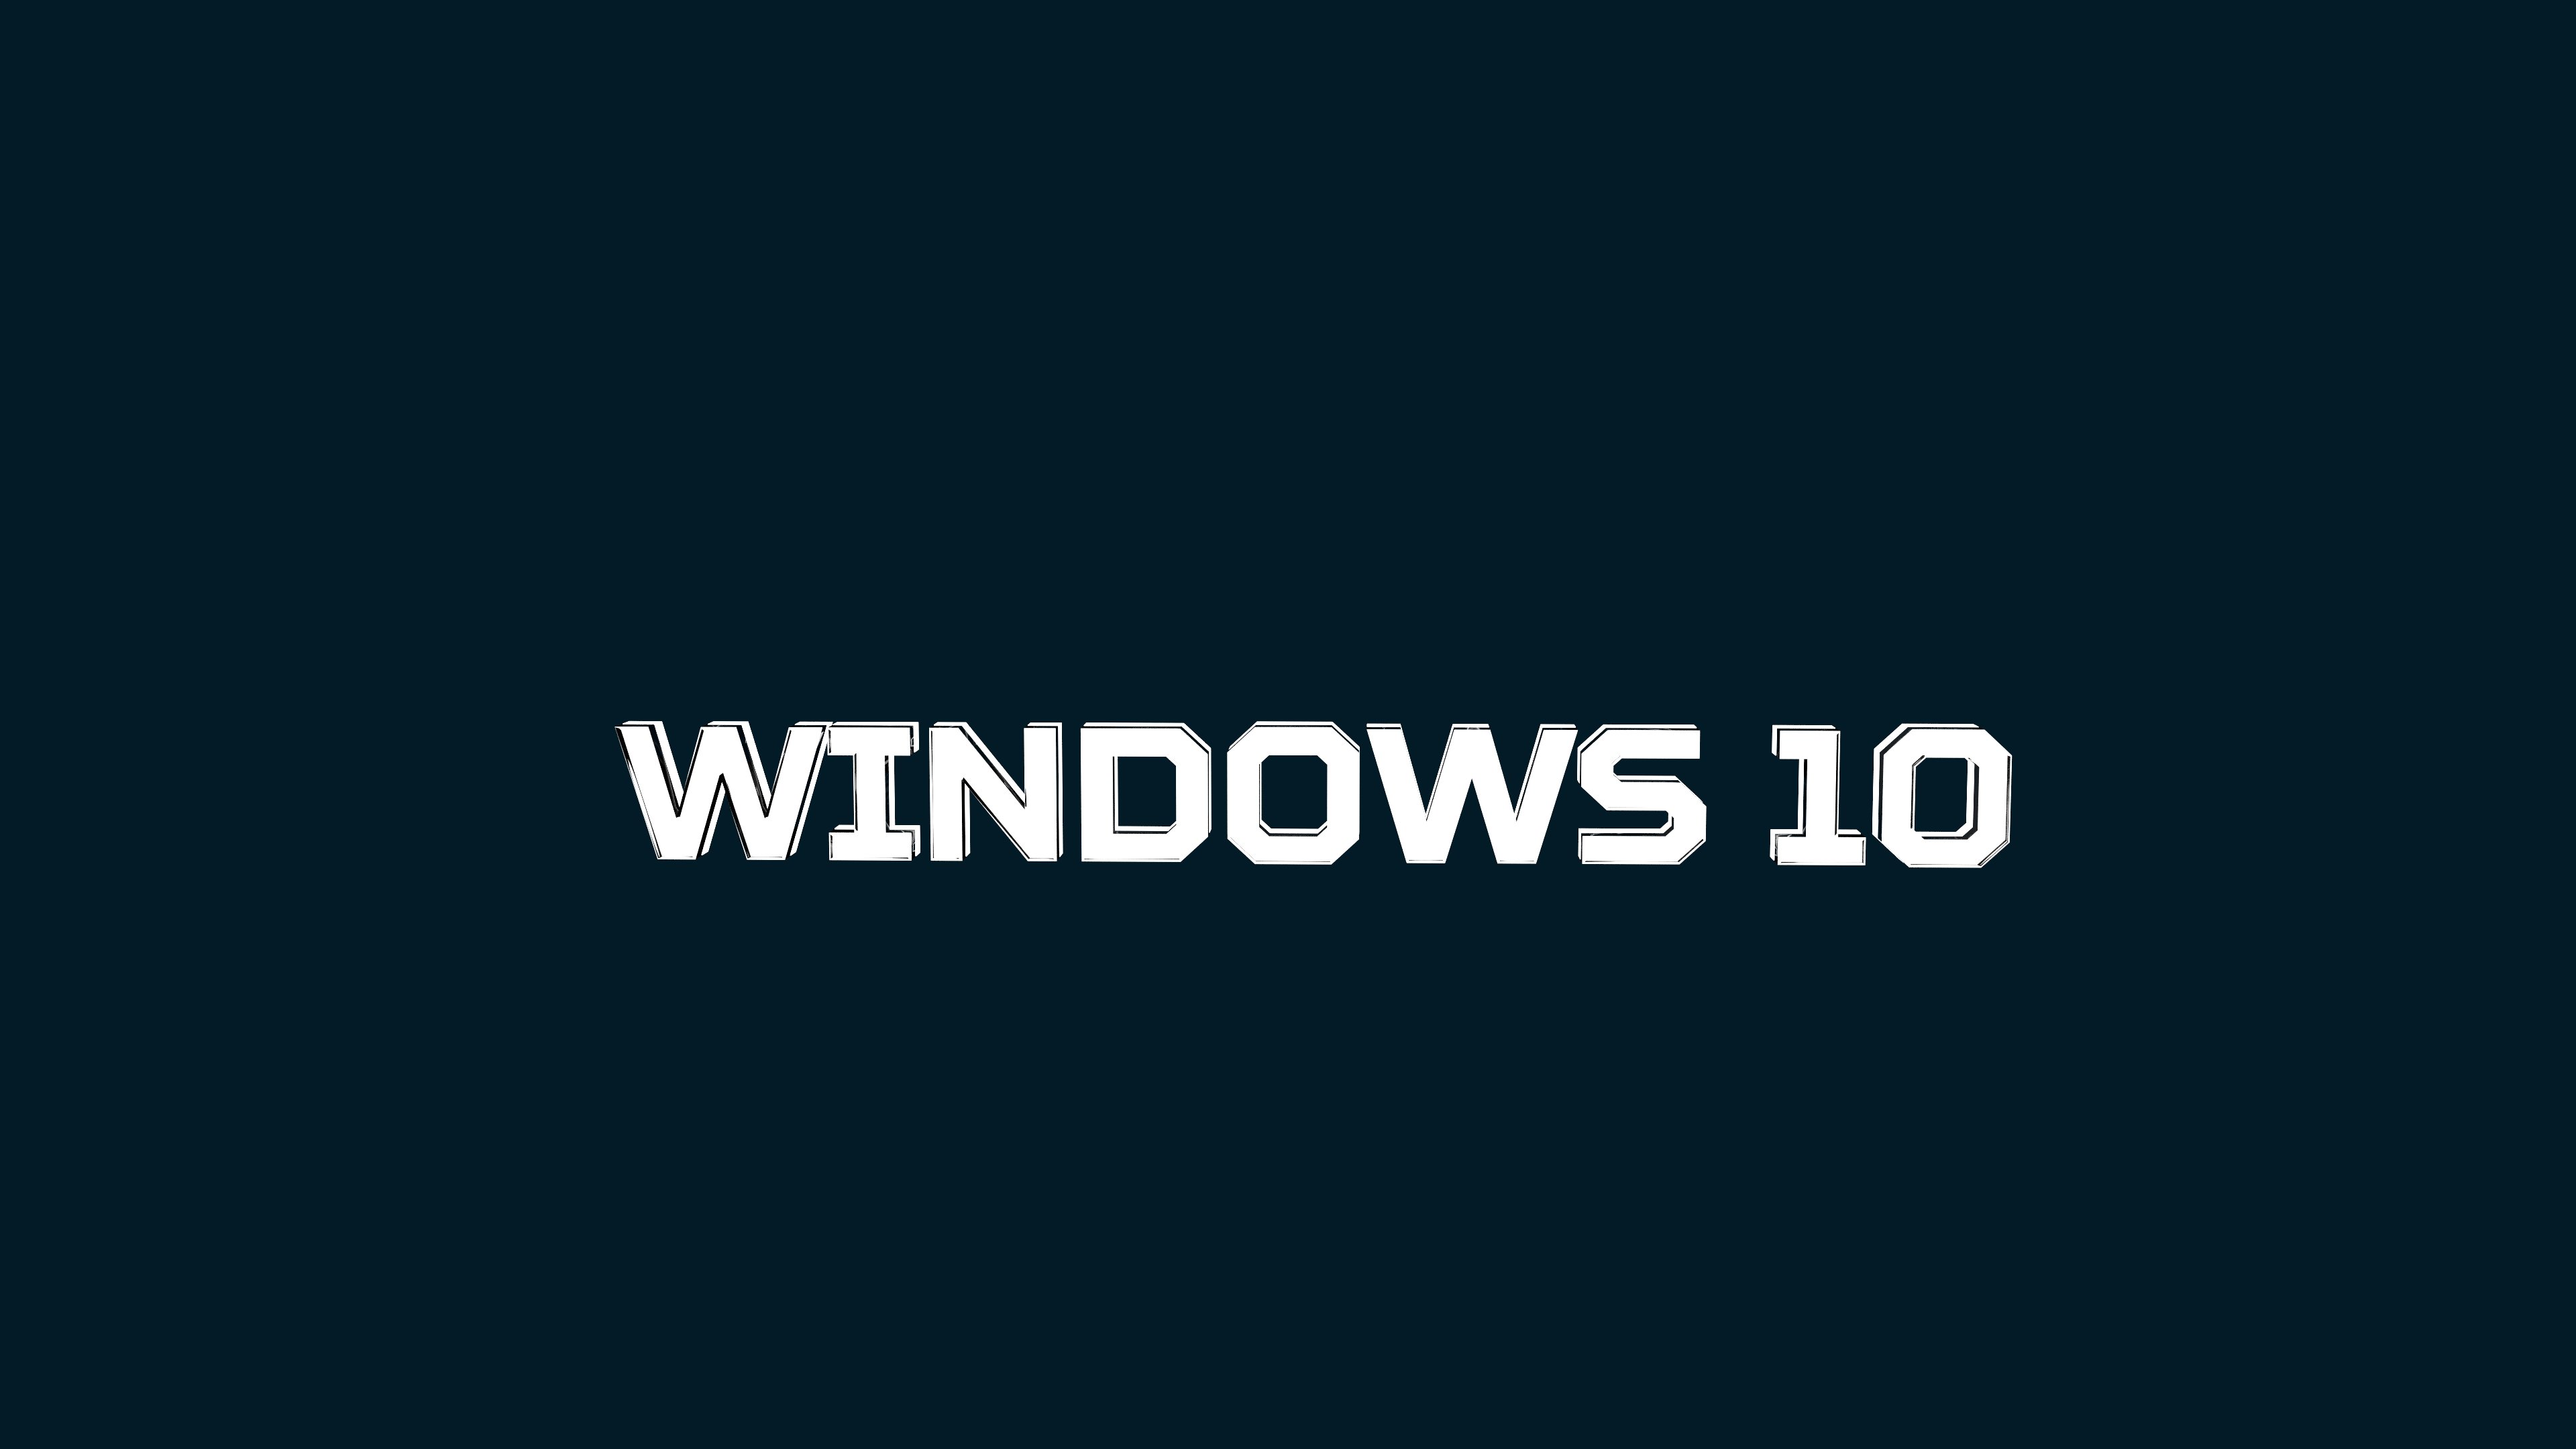 WINDOWS 10 microsoft computer wallpaper | 3840x2160 | 676070 ...